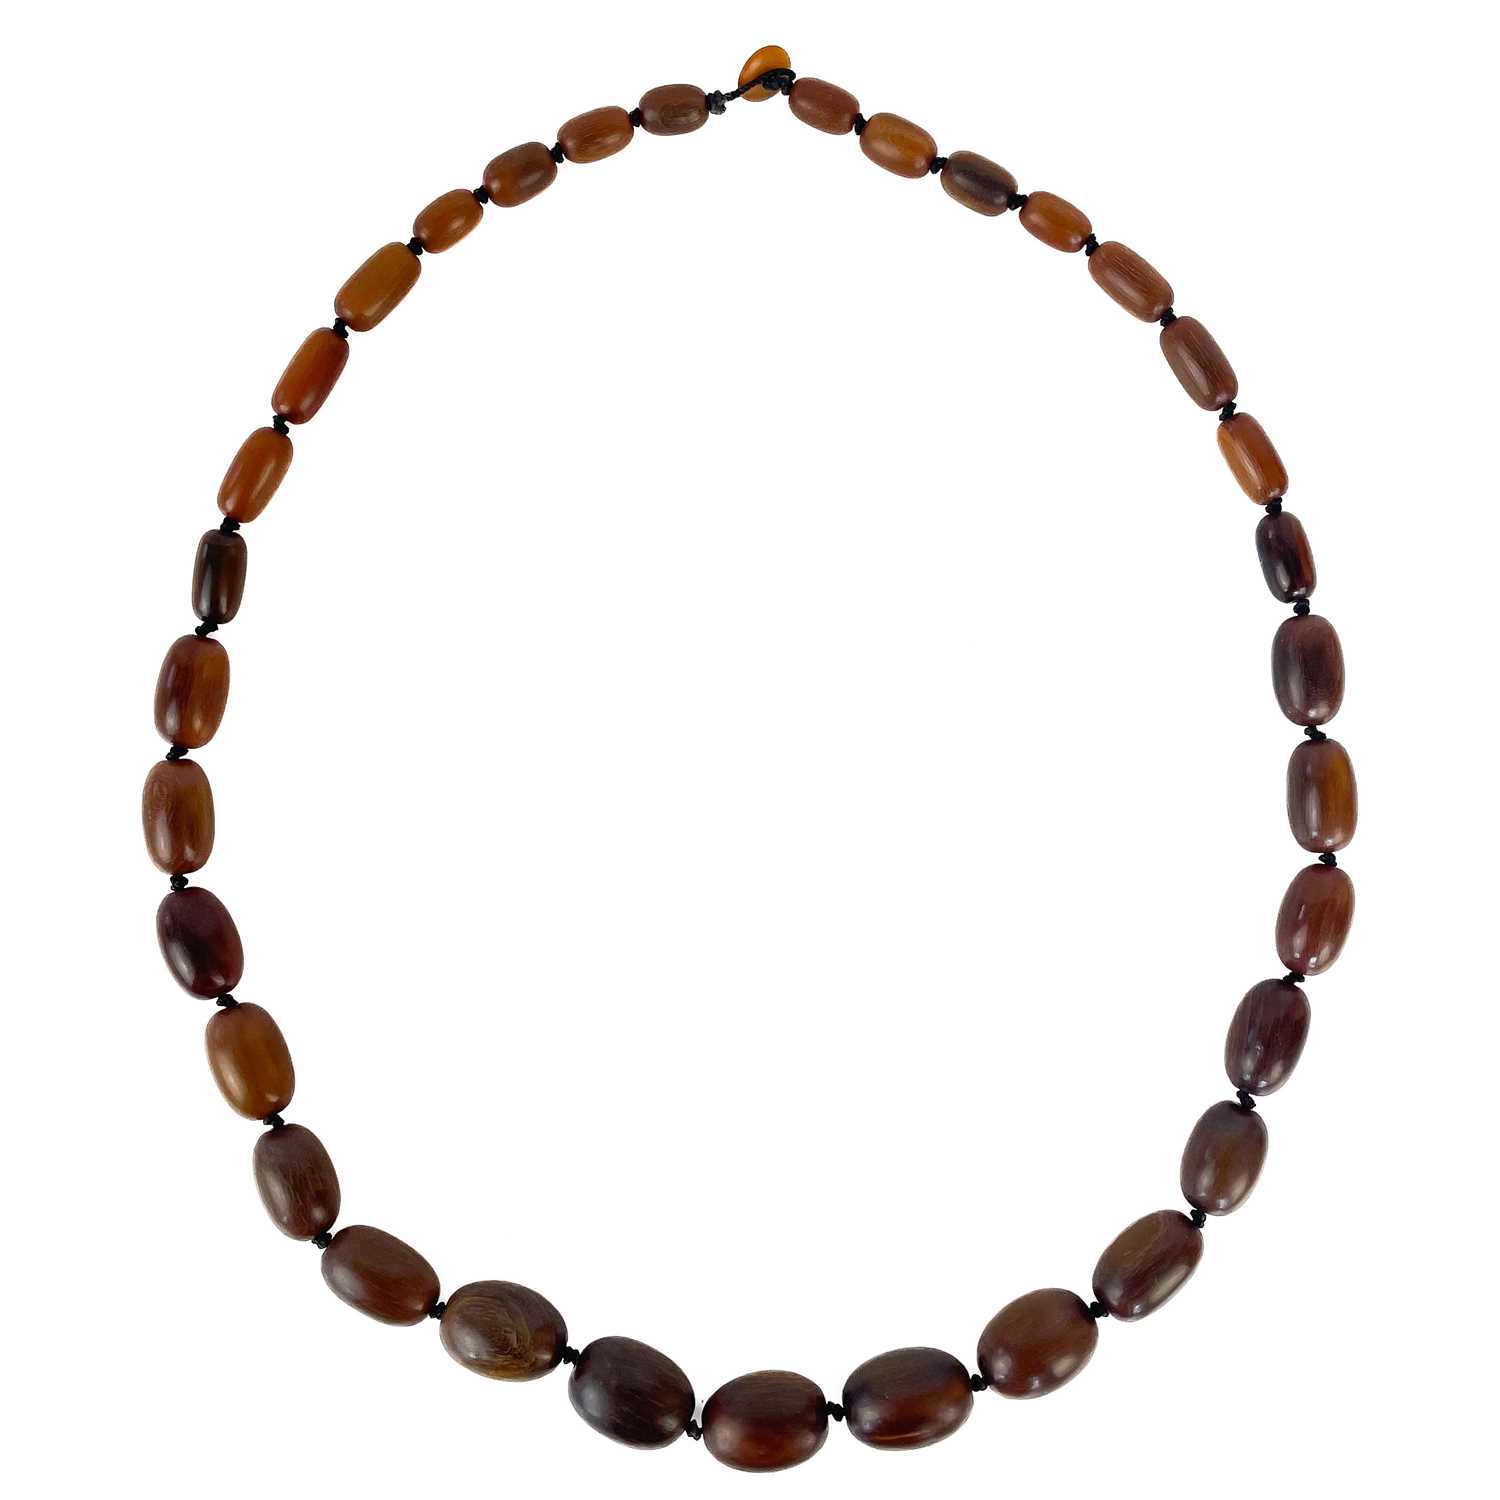 A Qing dynasty Rhinoceros horn graduated oval bead necklace.